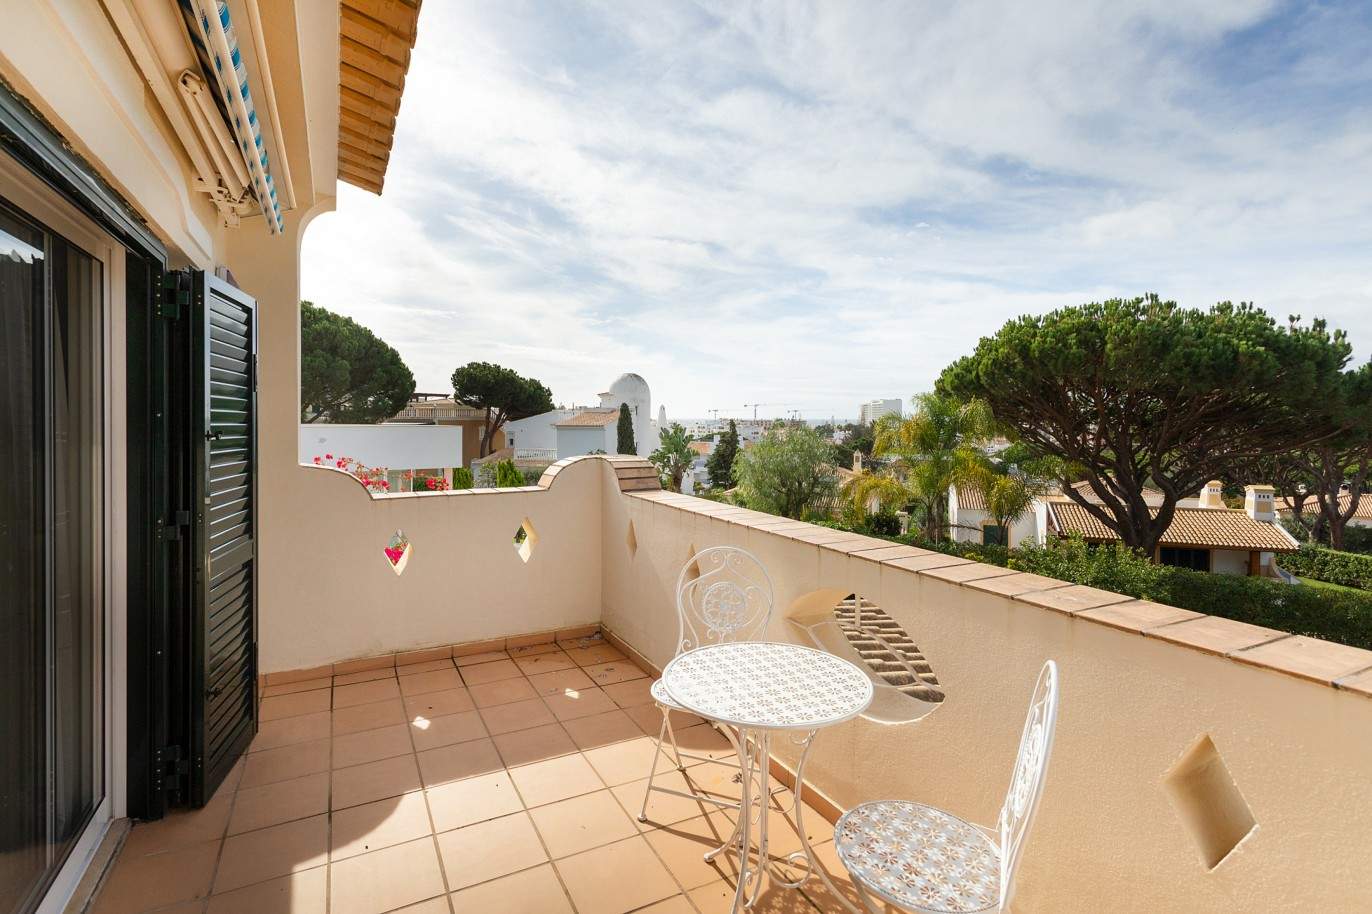 Moradia V5 com piscina, para venda em Vilamoura, Algarve_212564